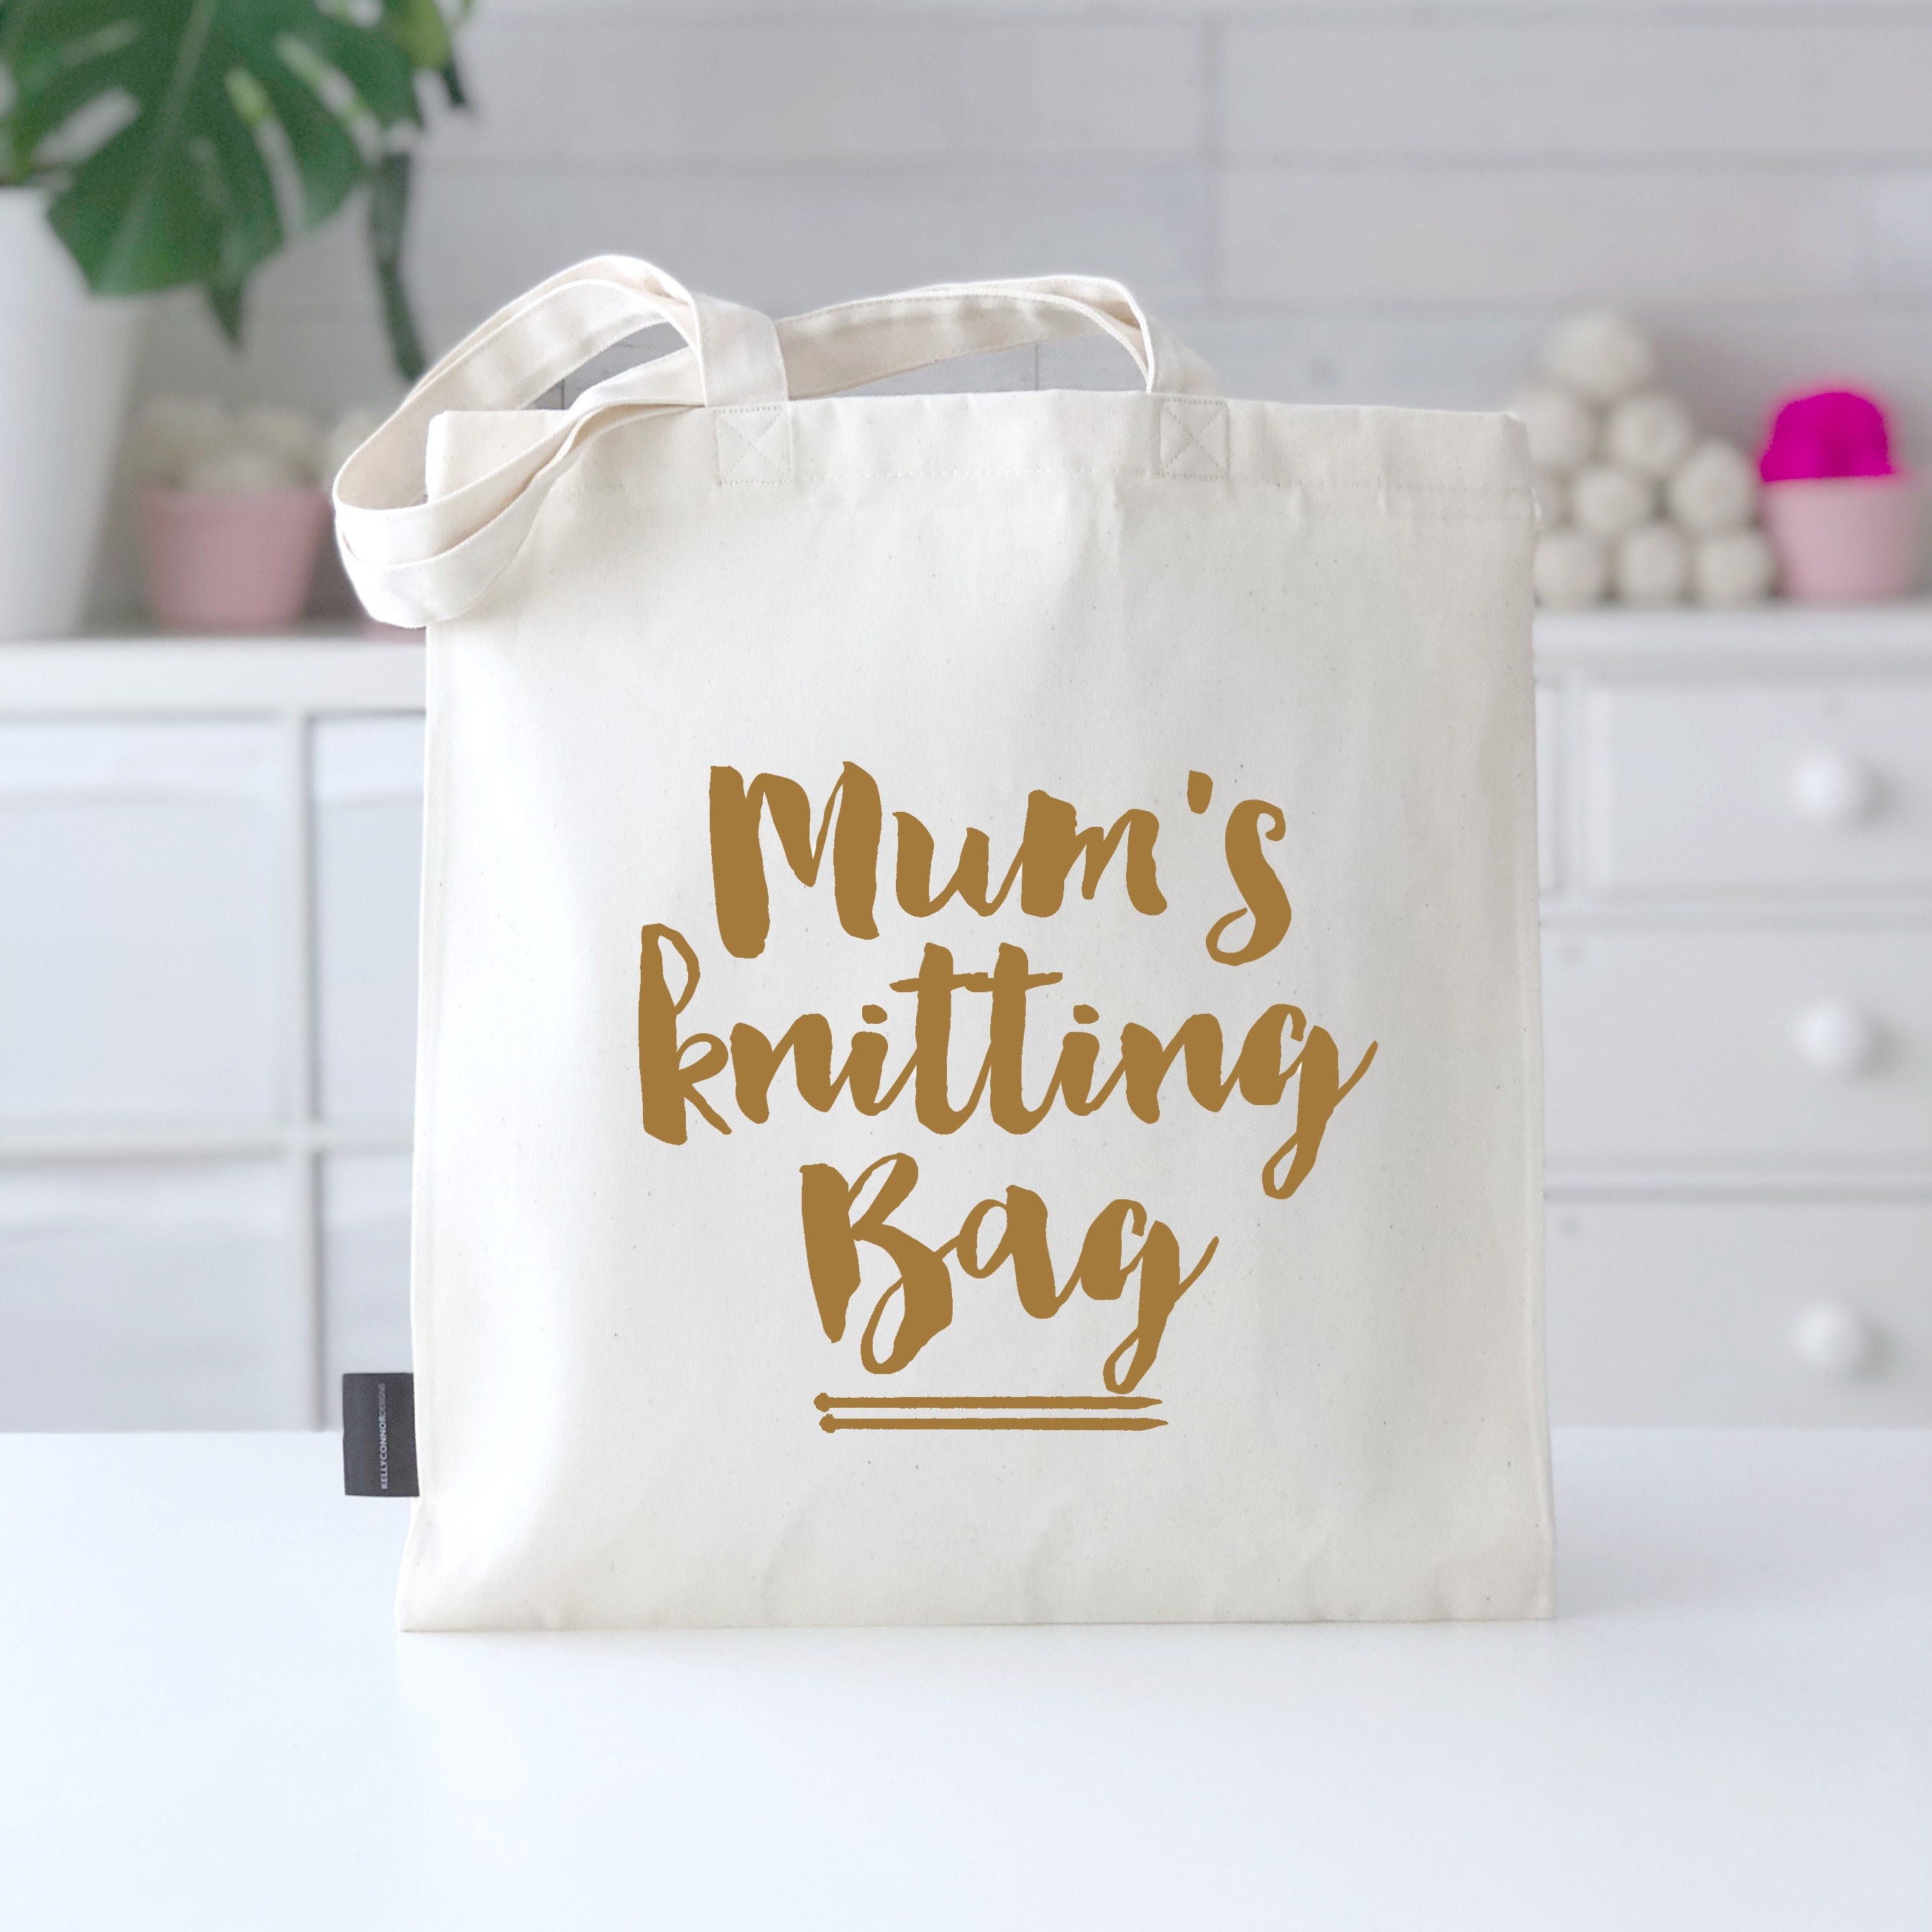 My mum made it. My mum made it сумка. Hello Mumu сумка. My mum made it сумка как сделать. Project Bag.